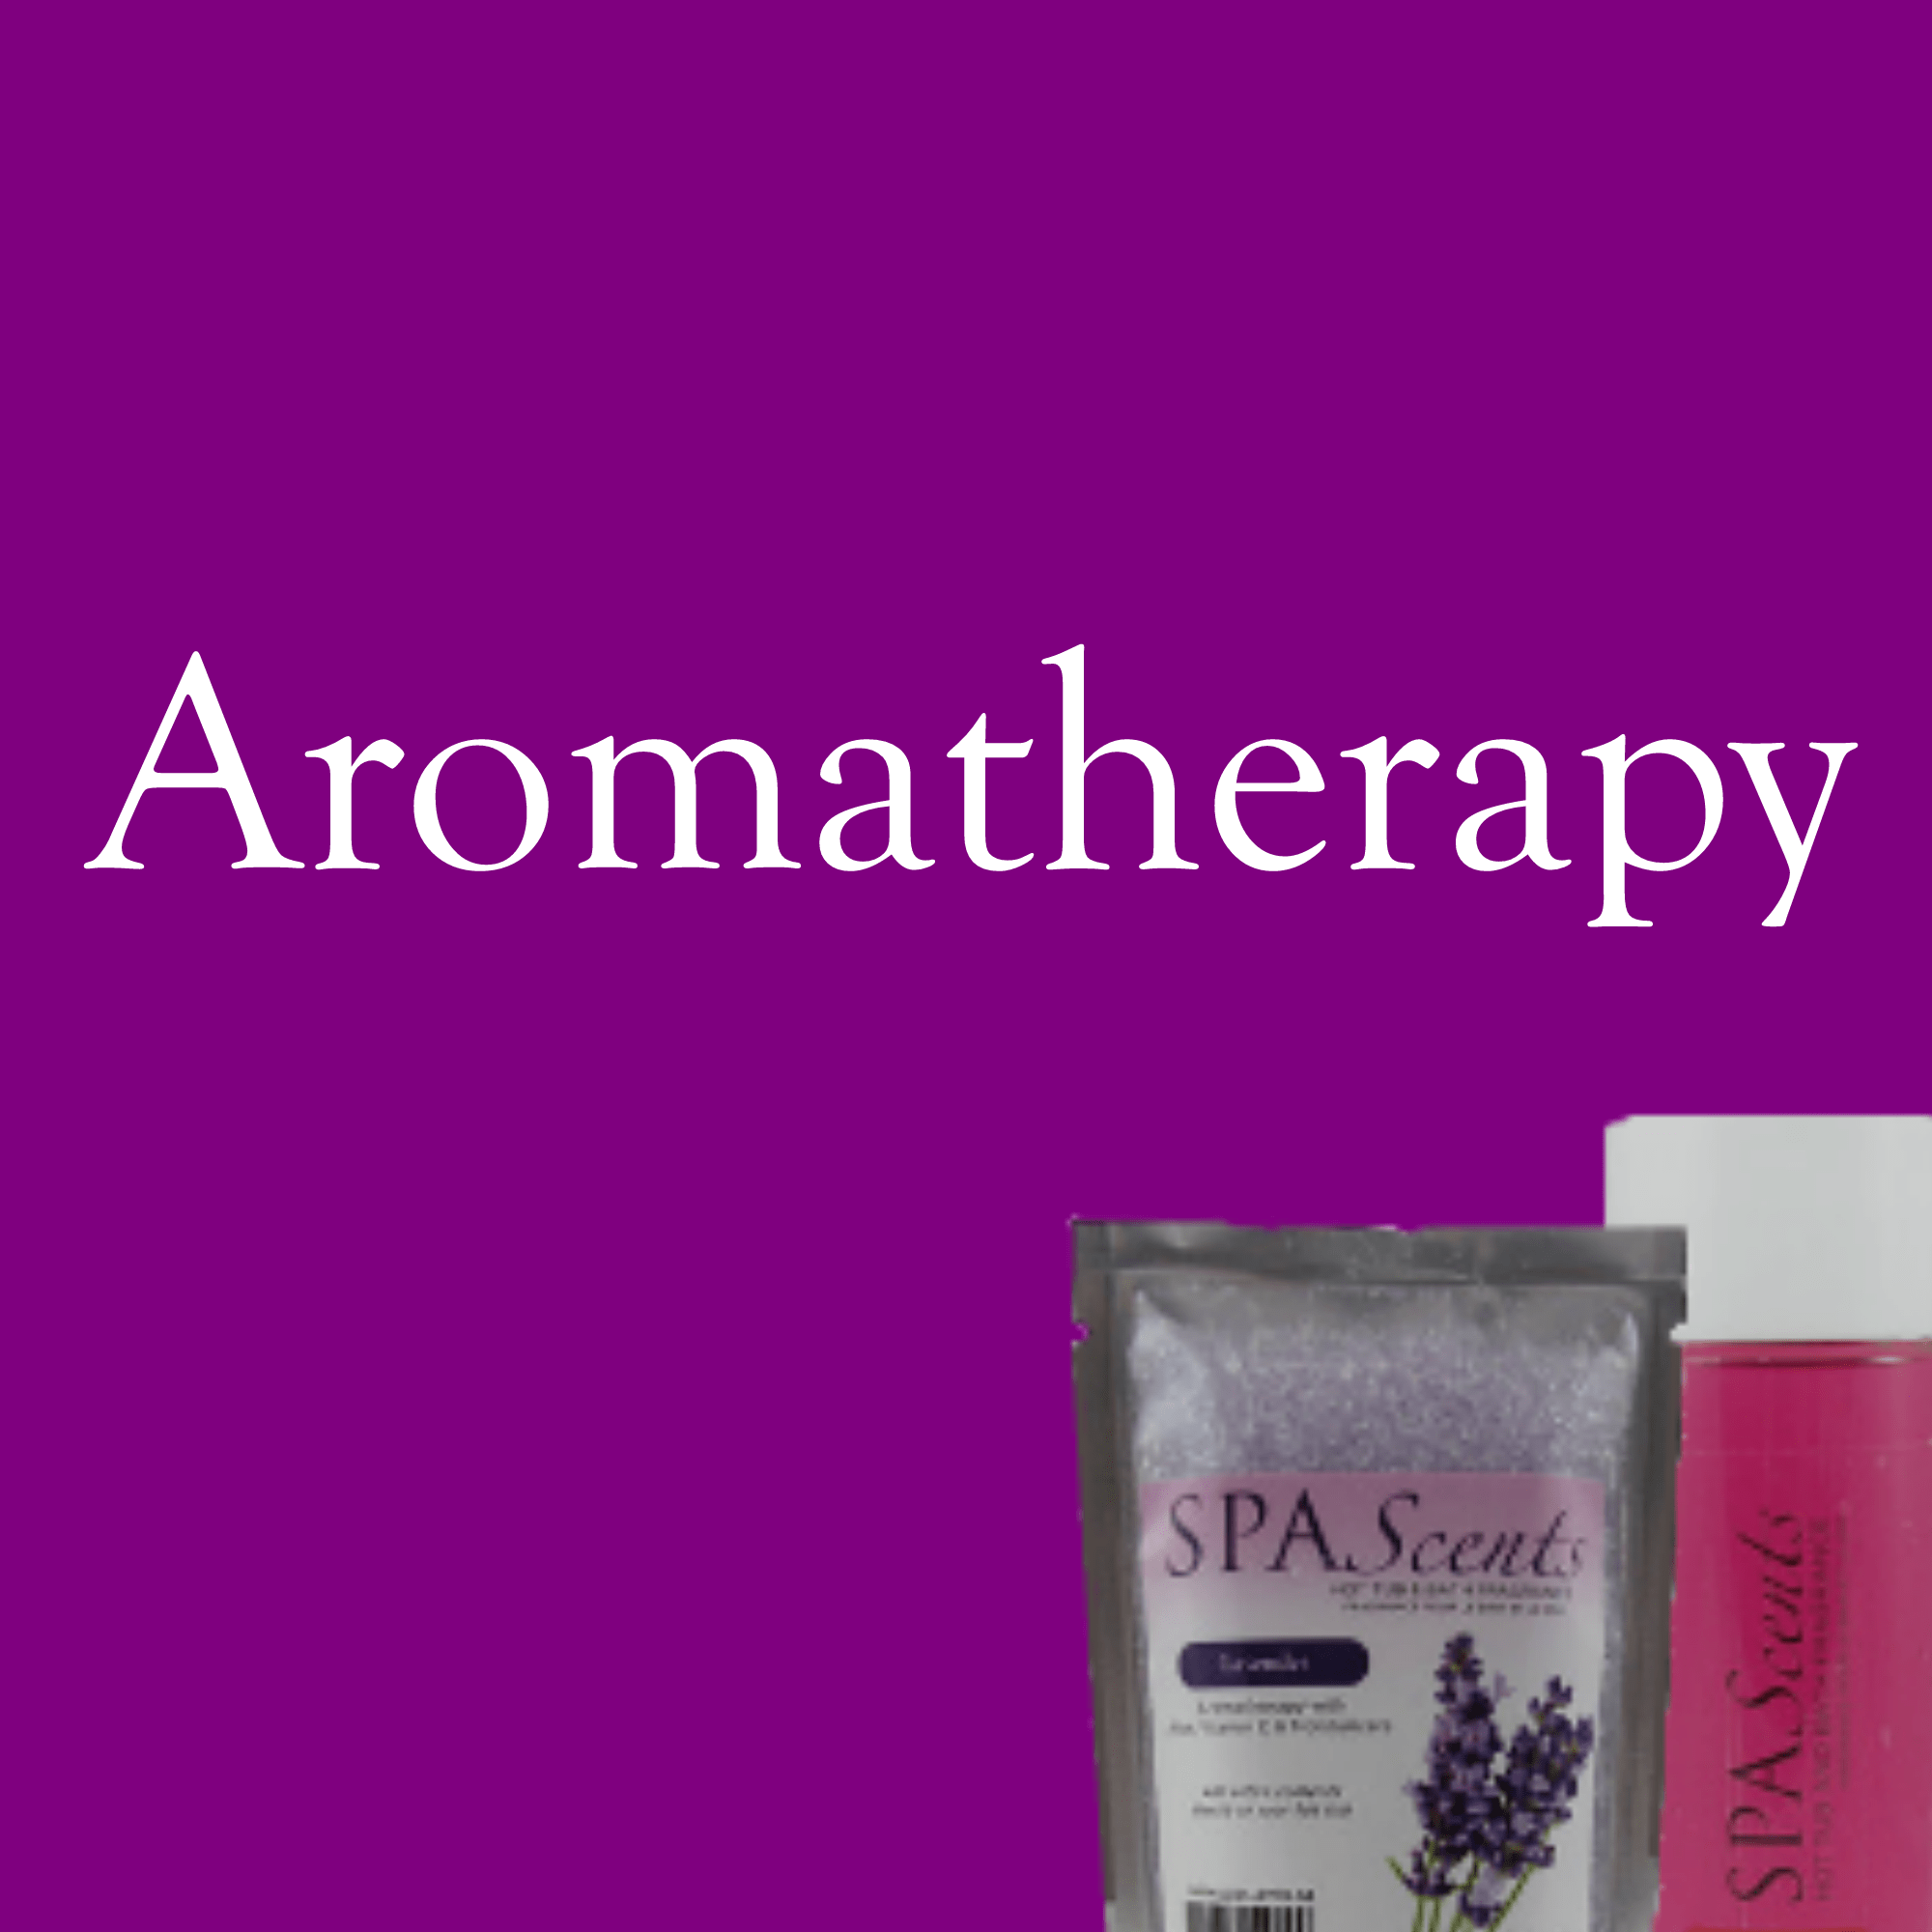 Aromatheraphy